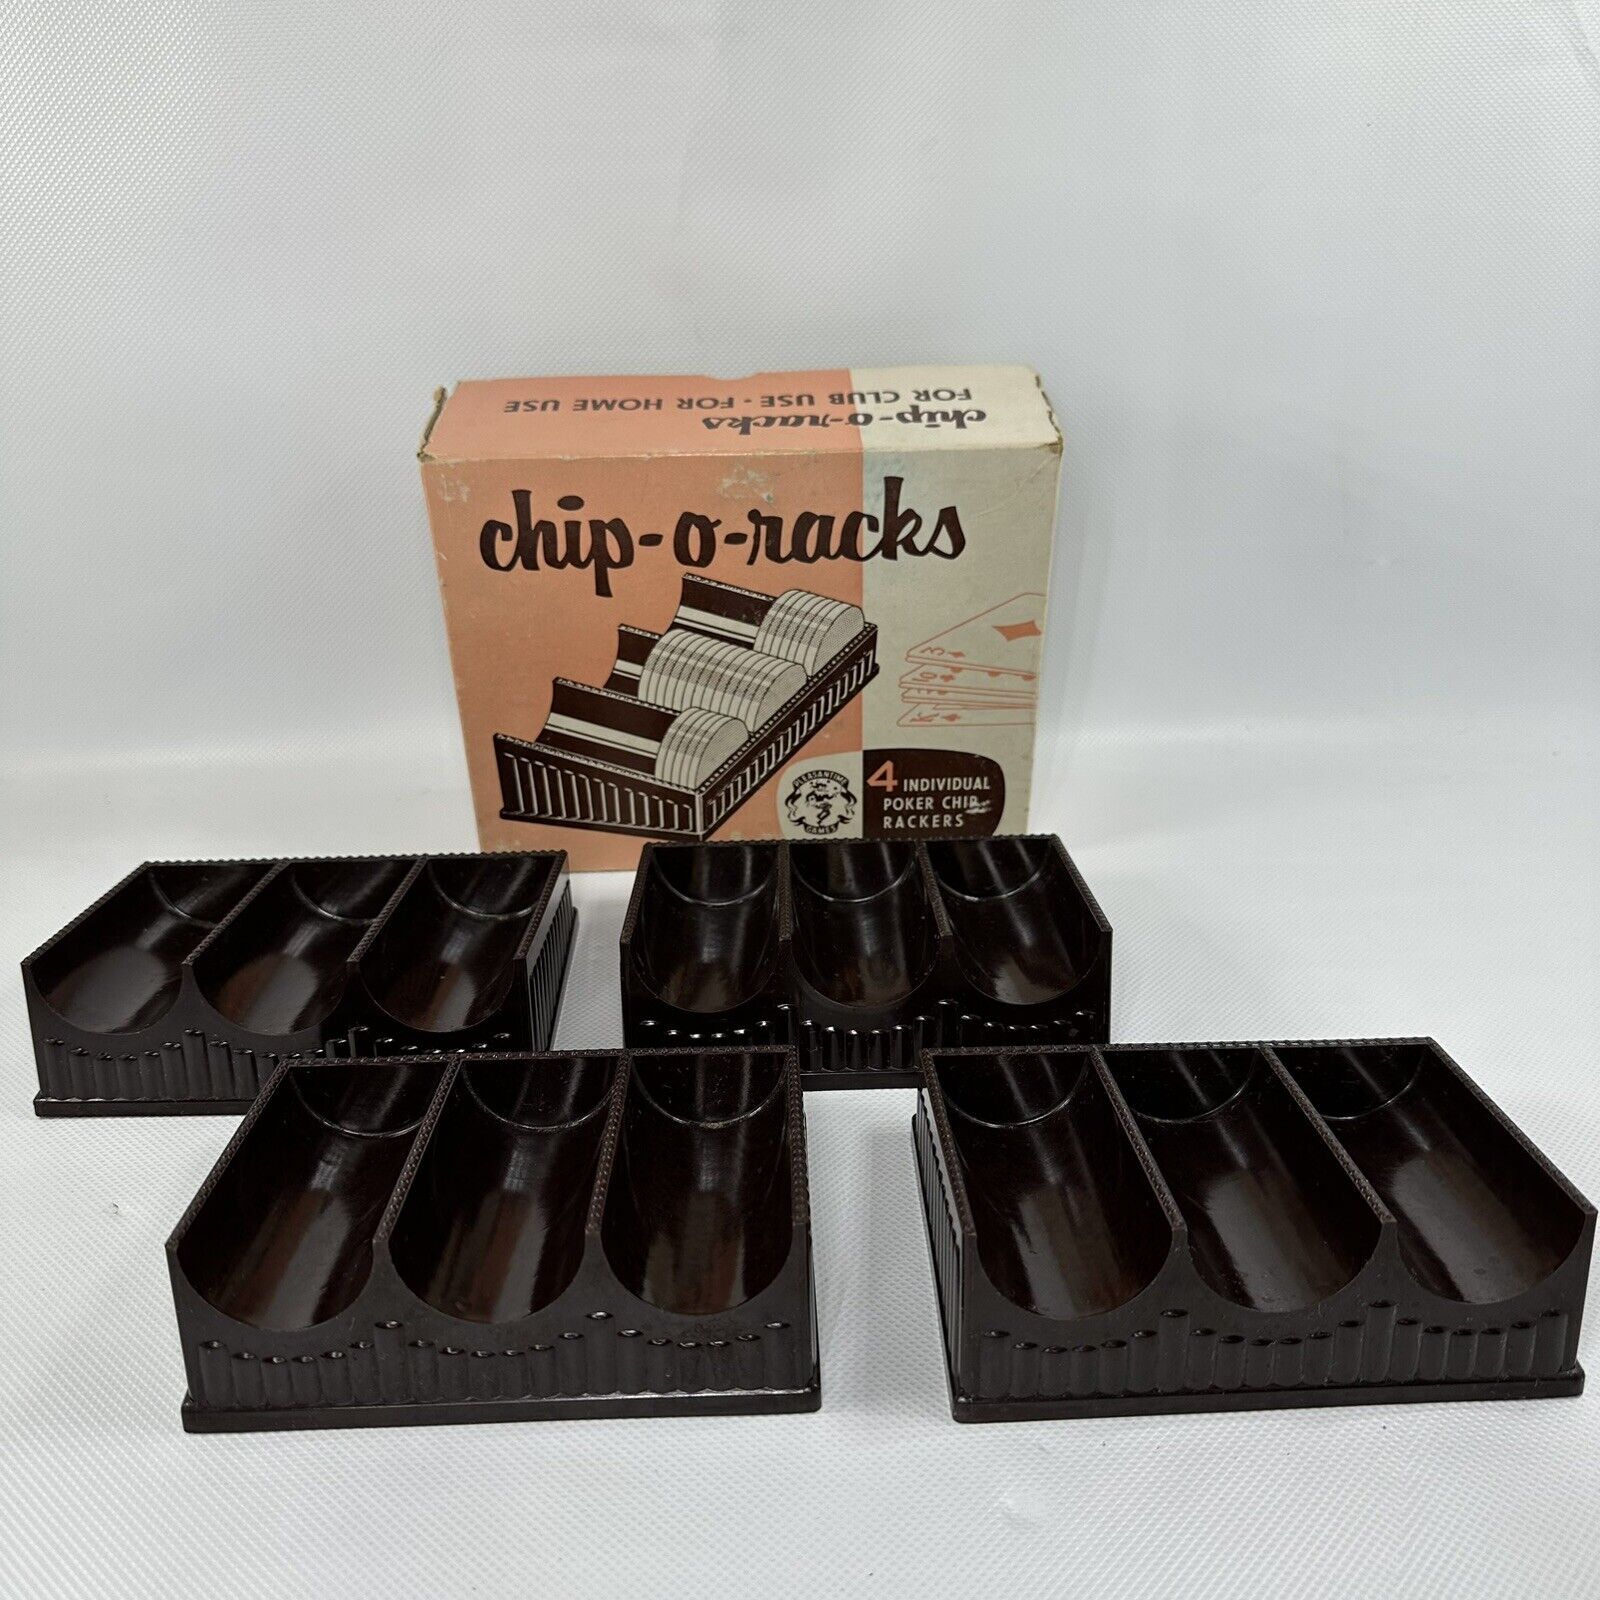 Vintage Poker Chips Chip-O-Racks BAKELITE Rackers In Original Box